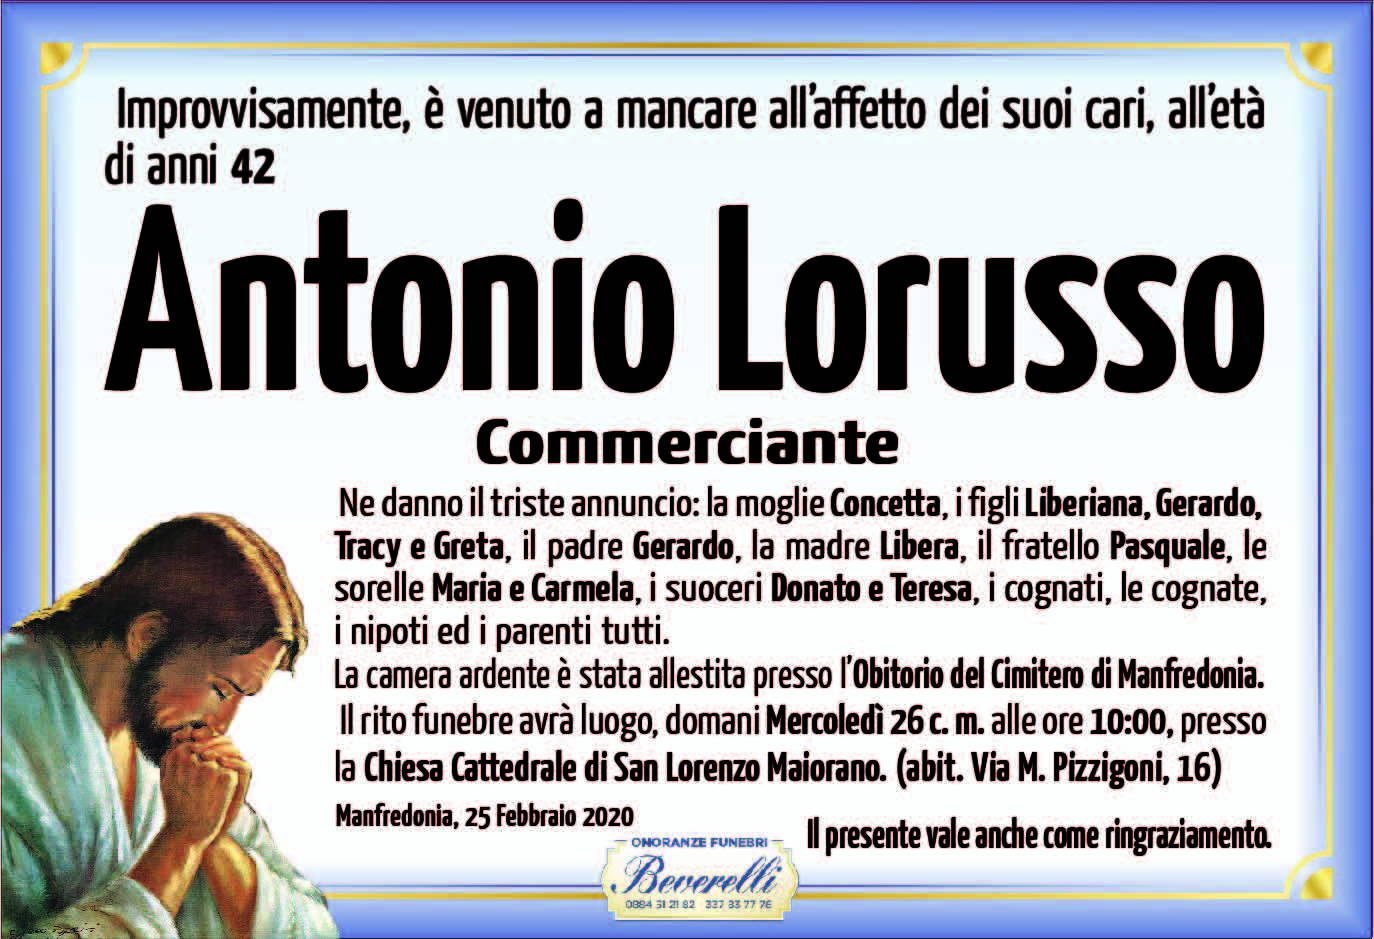 Antonio Lorusso